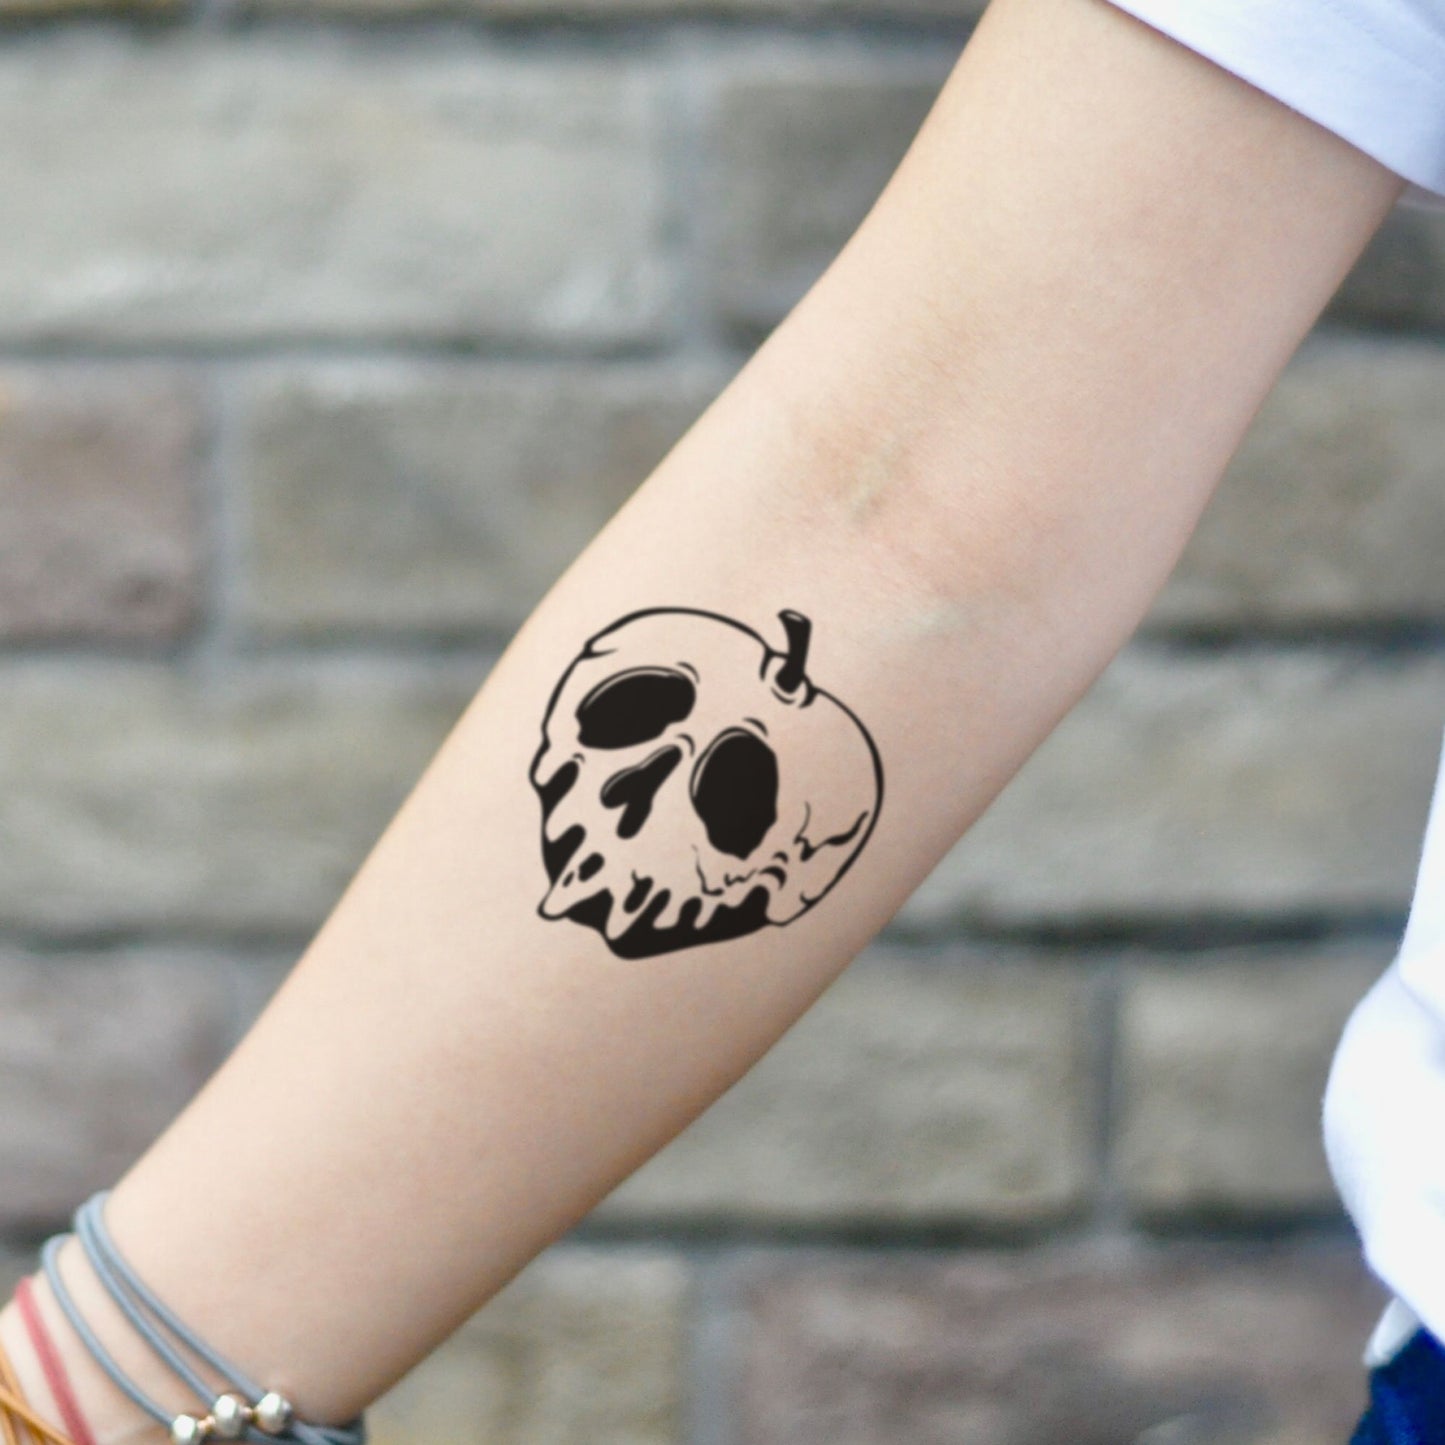 fake small poison apple disney snow white evil queen illustrative temporary tattoo sticker design idea on inner arm